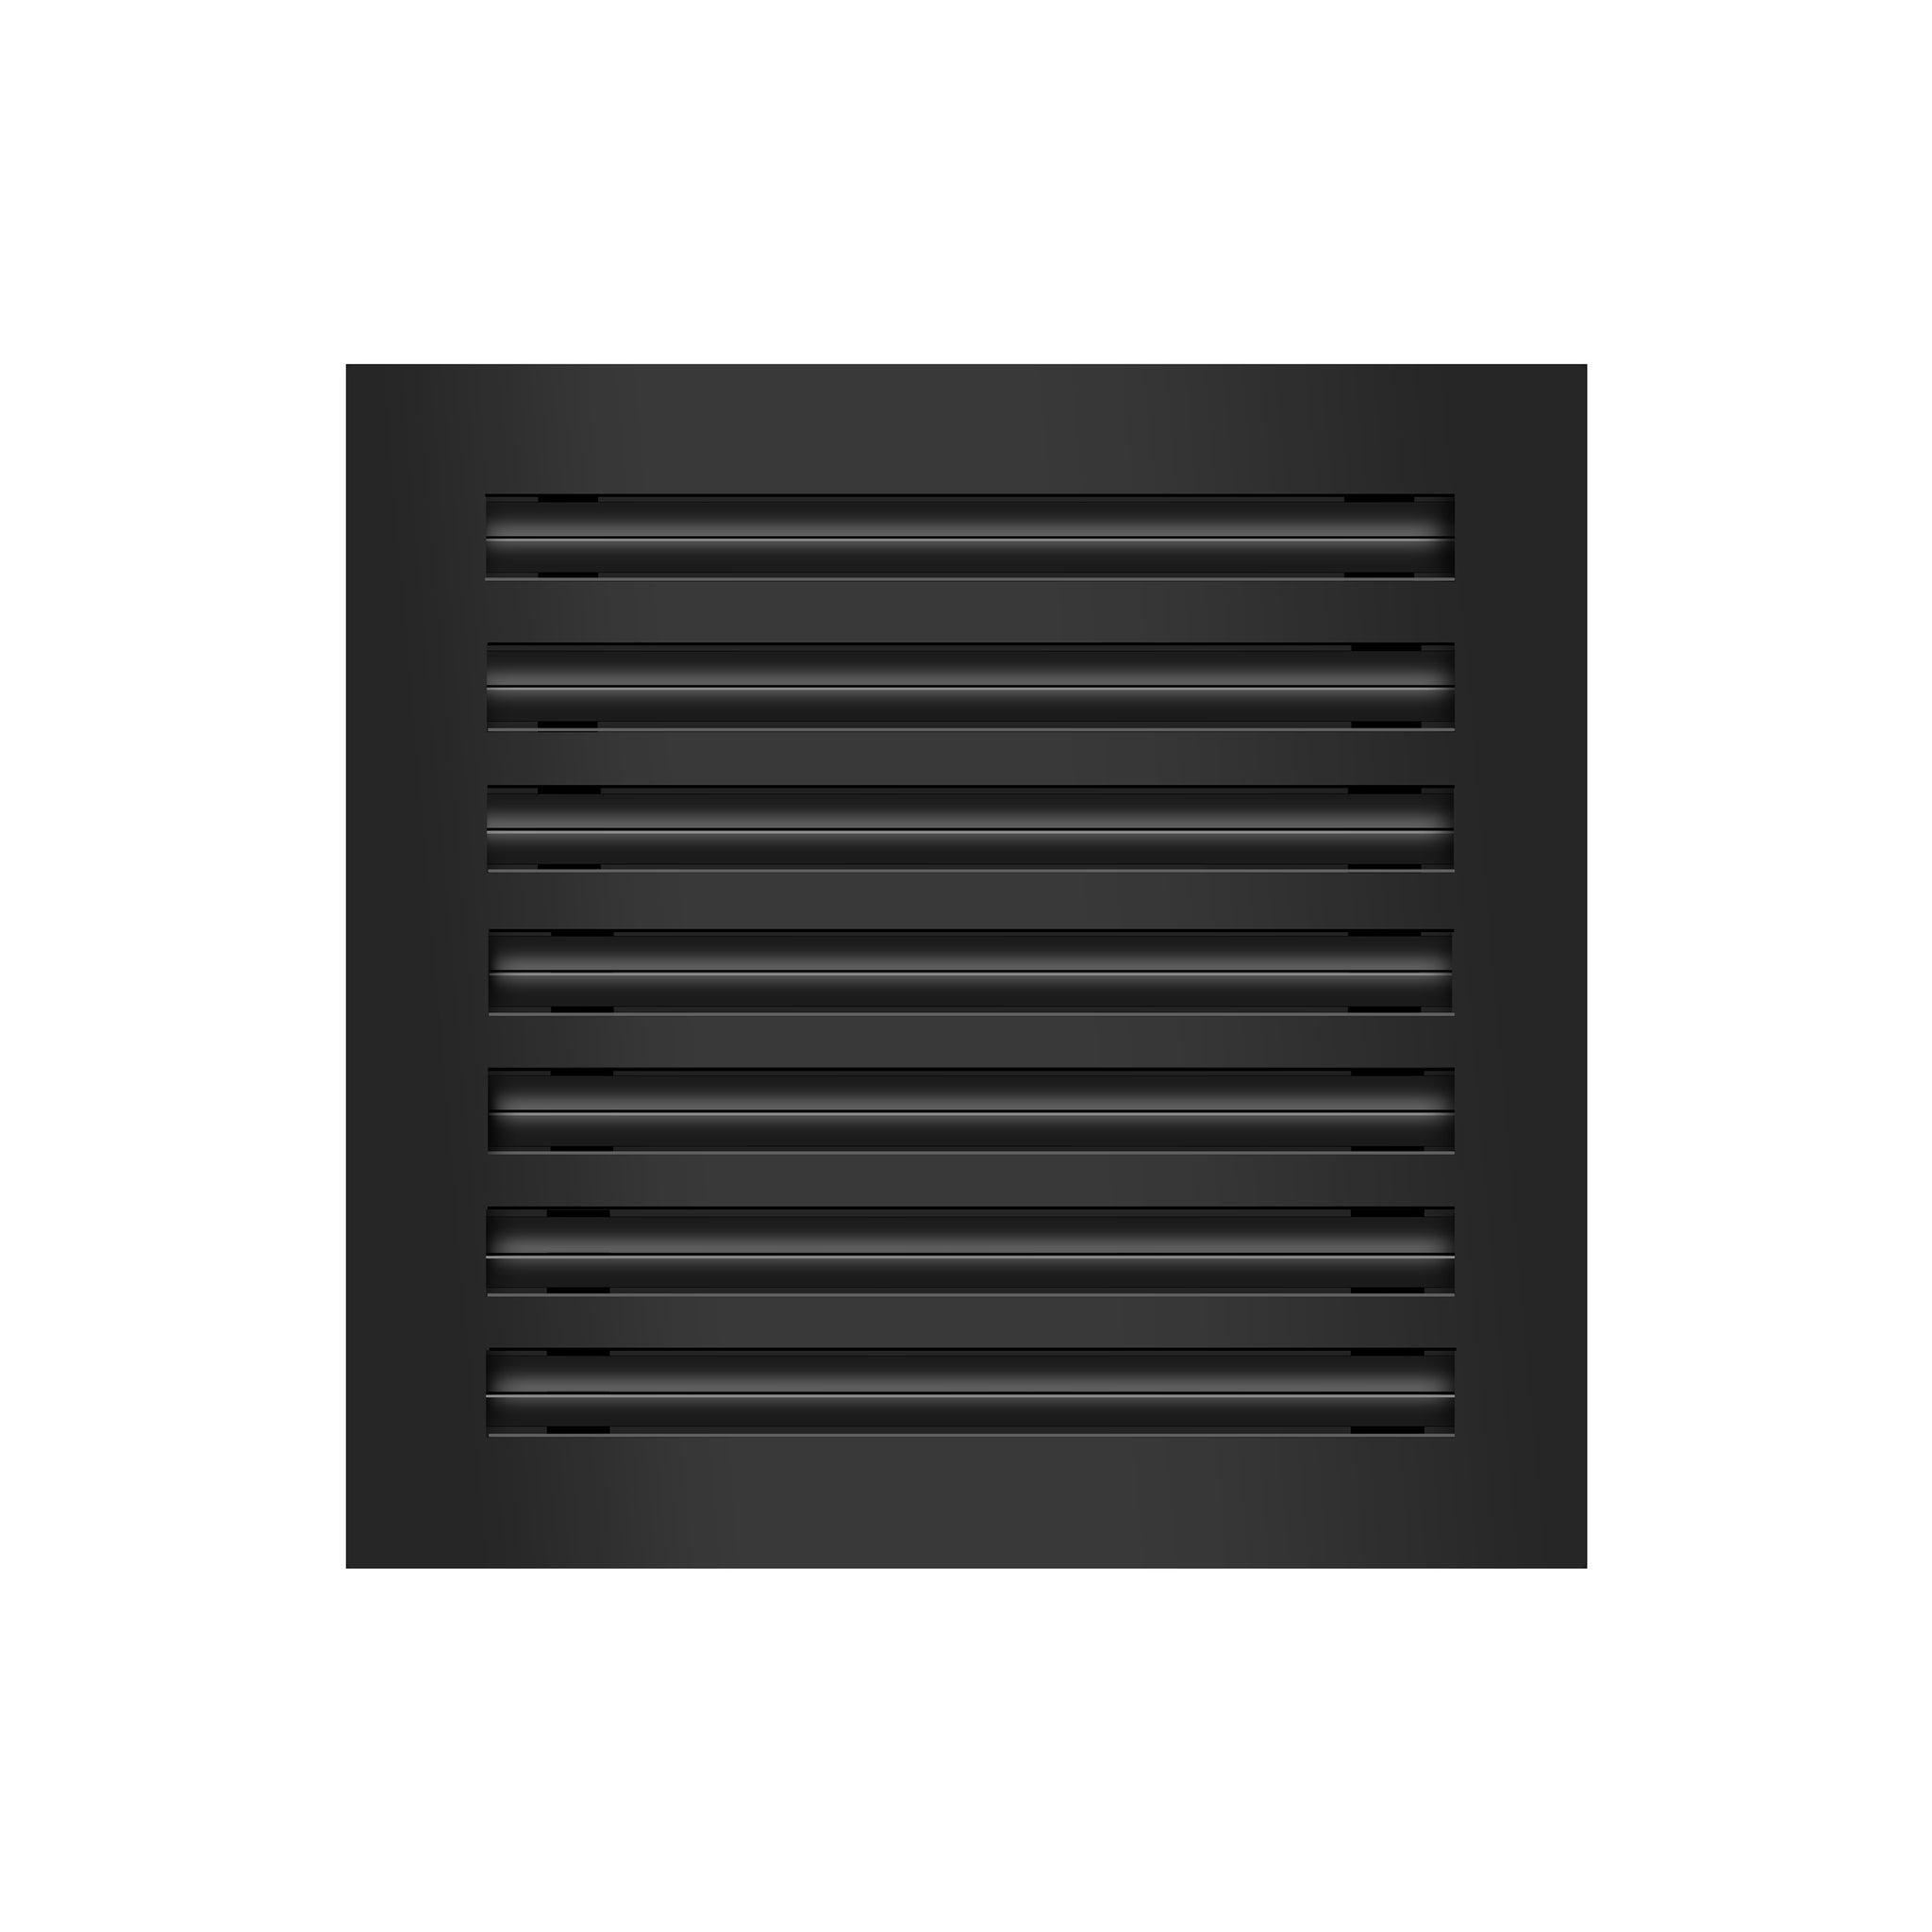 Front View of 14x14 Modern Air Vent Cover Black - 14x14 Standard Linear Slot Diffuser Black - Texas Buildmart